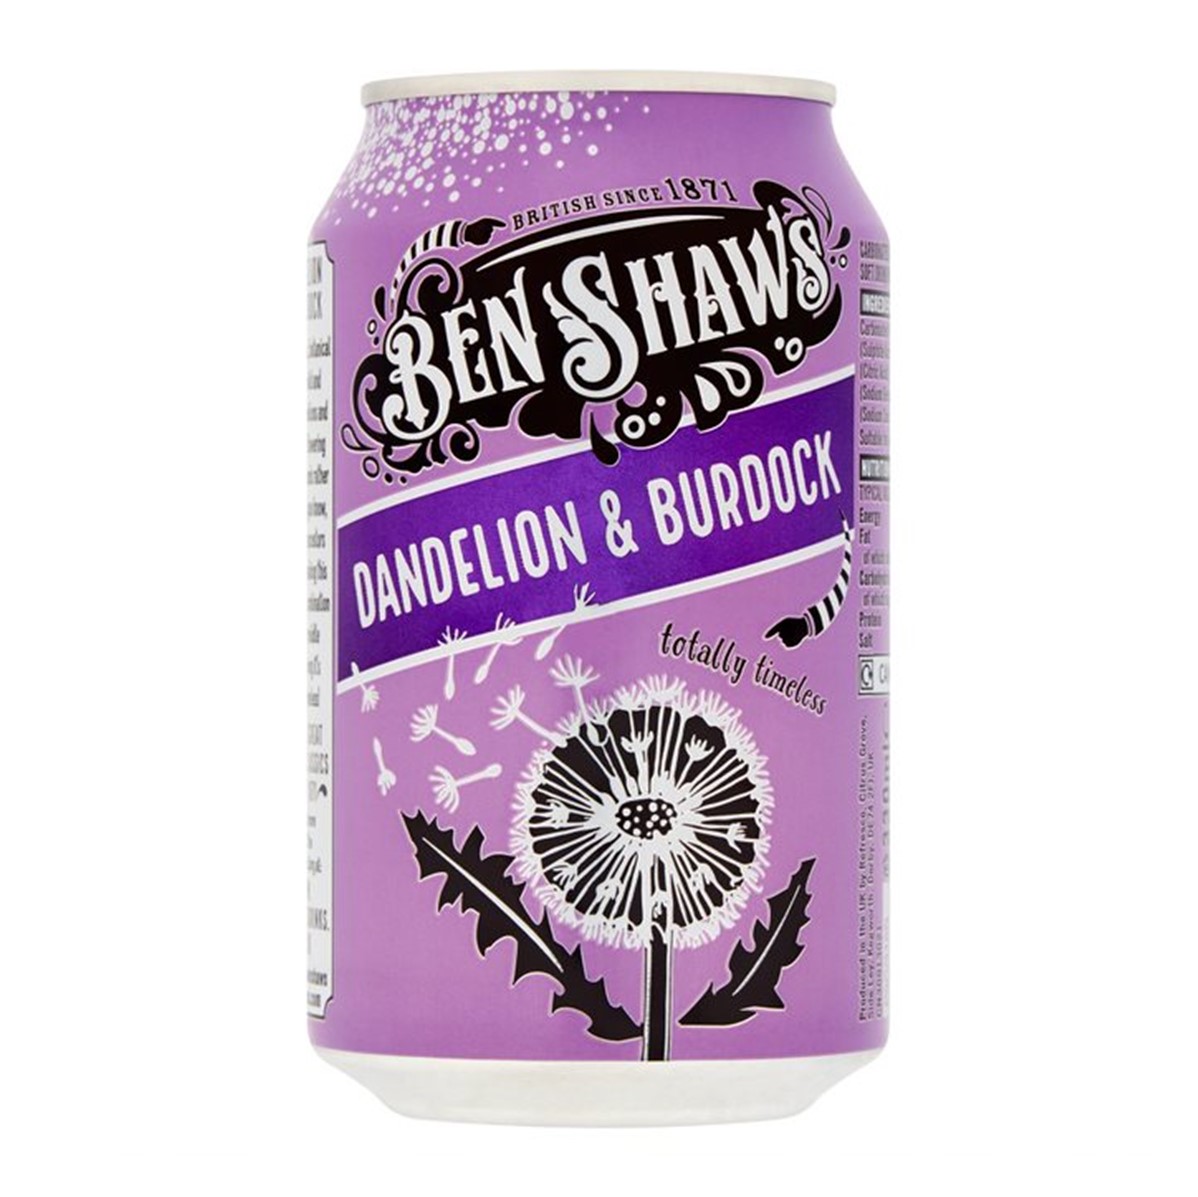 Ben Shaws Dandelion & Burdock - 24x330ml cans